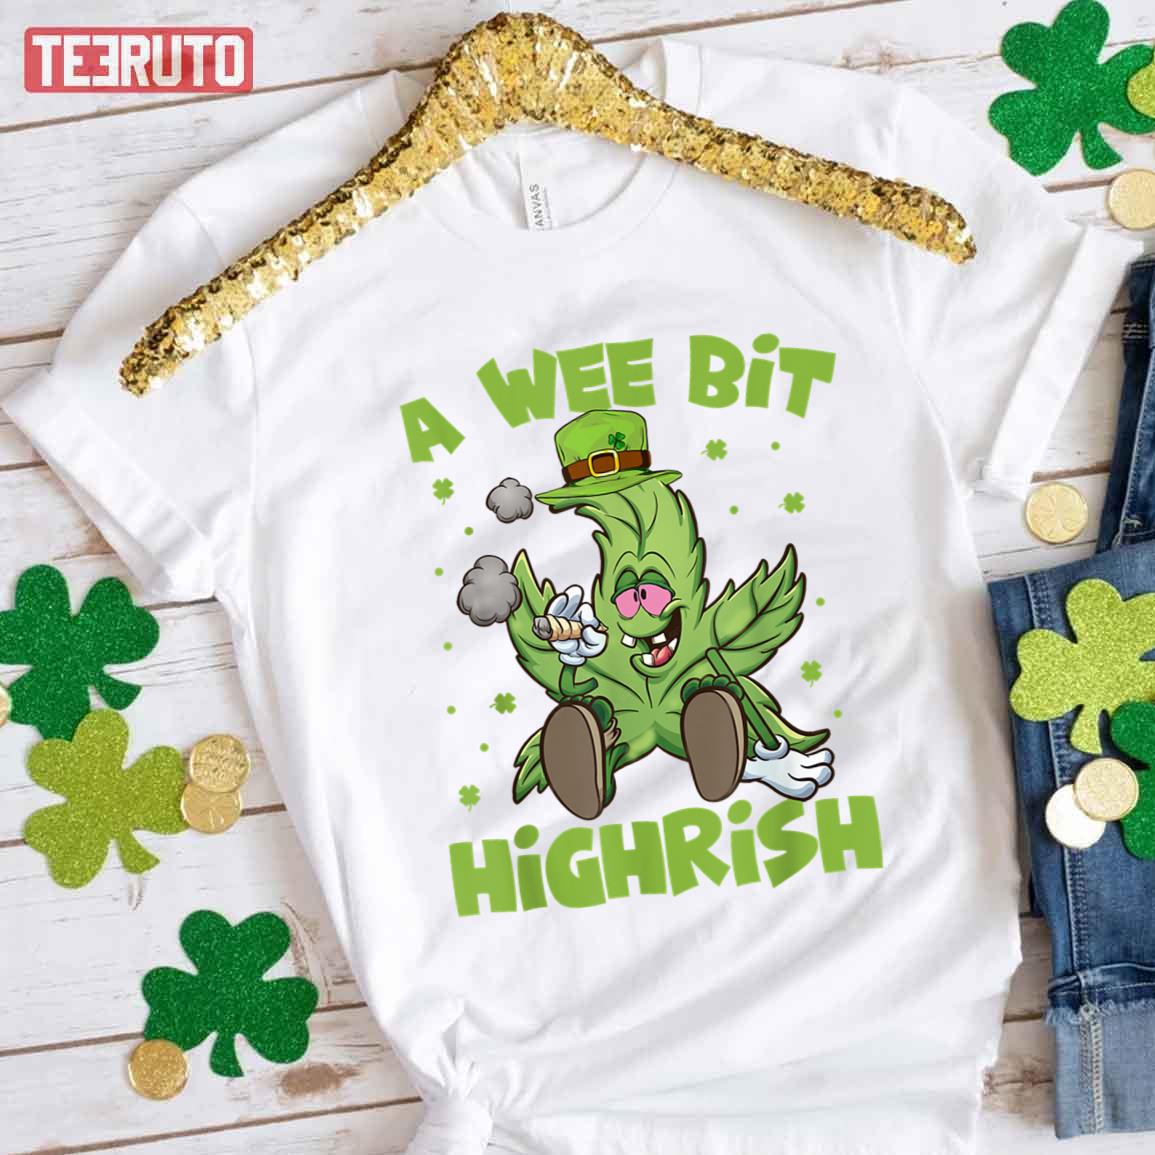 A Wee Bit High Rish Funny 420 Weed Marijuana St Patricks Day Unisex T-Shirt